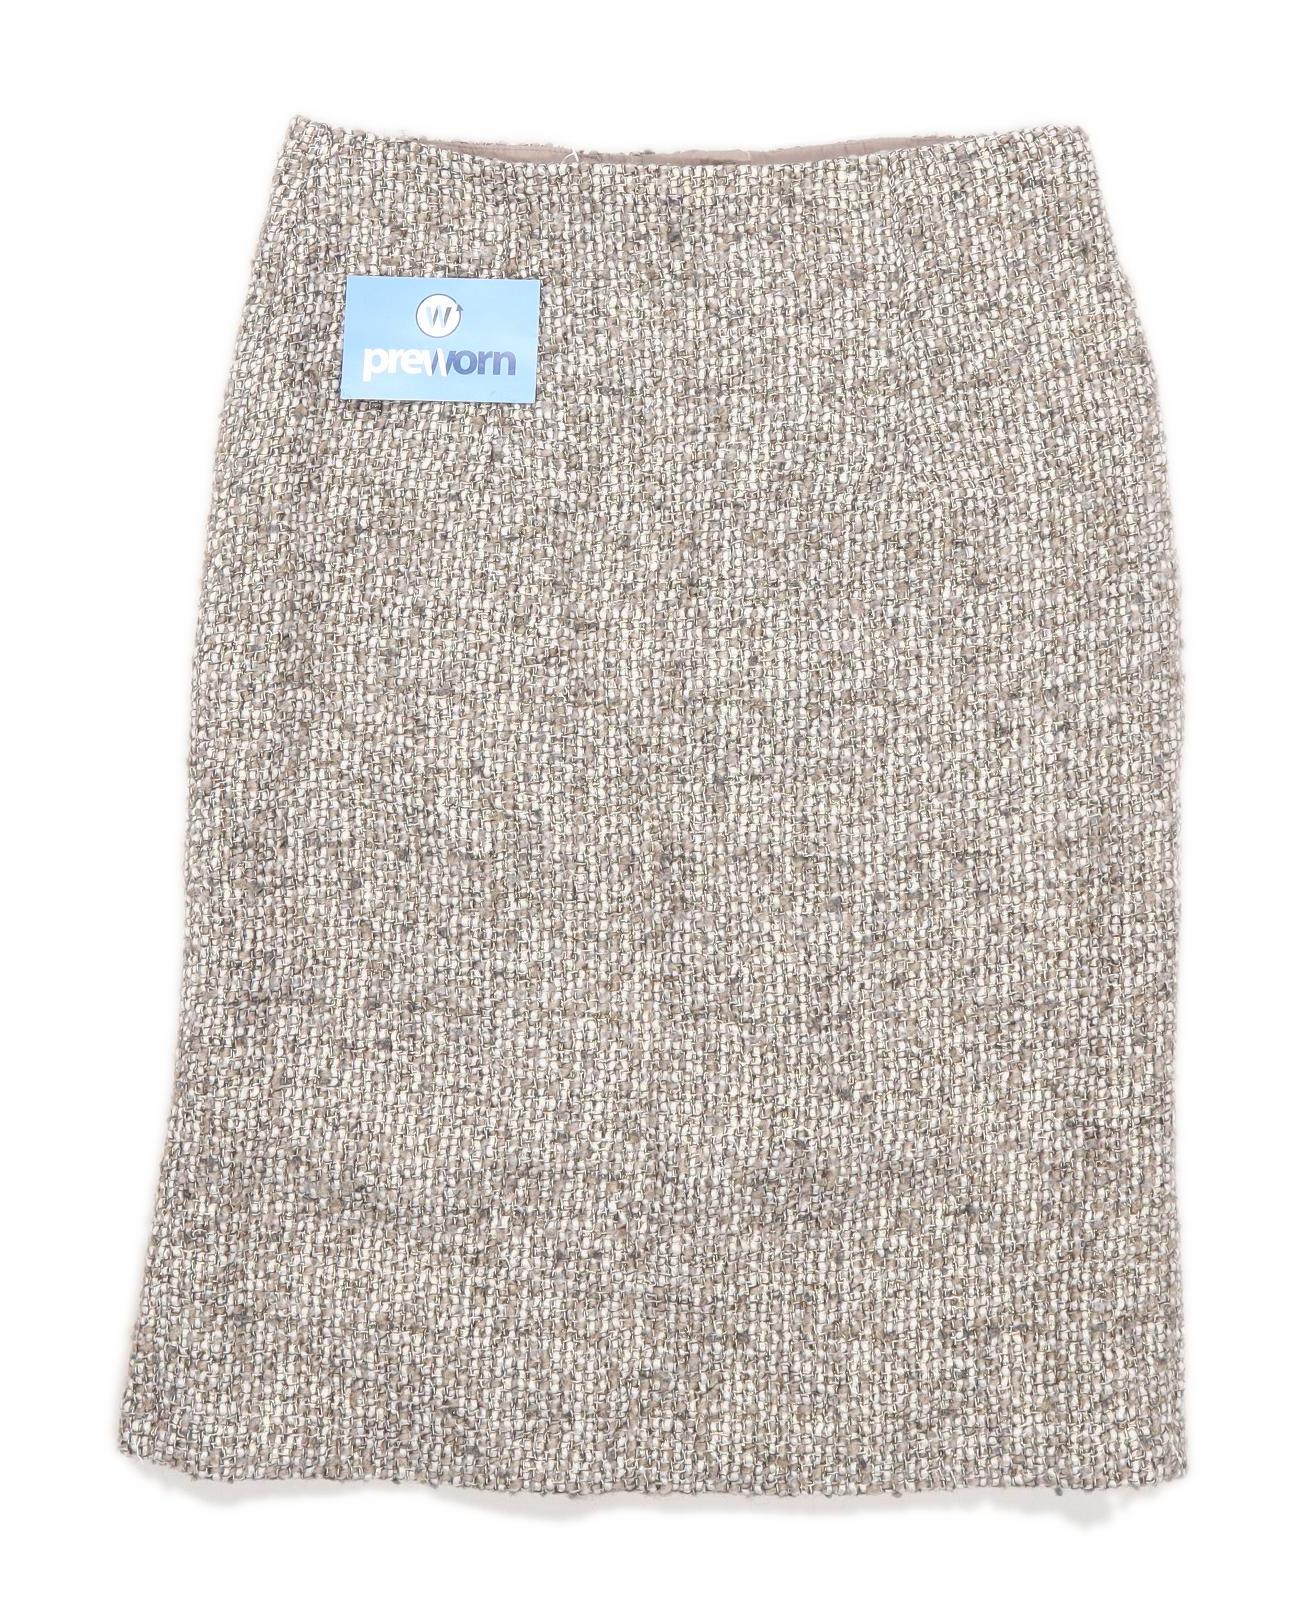 Marks & Spencer Womens Size 8 Textured Brown Pencil Skirt (Regular)